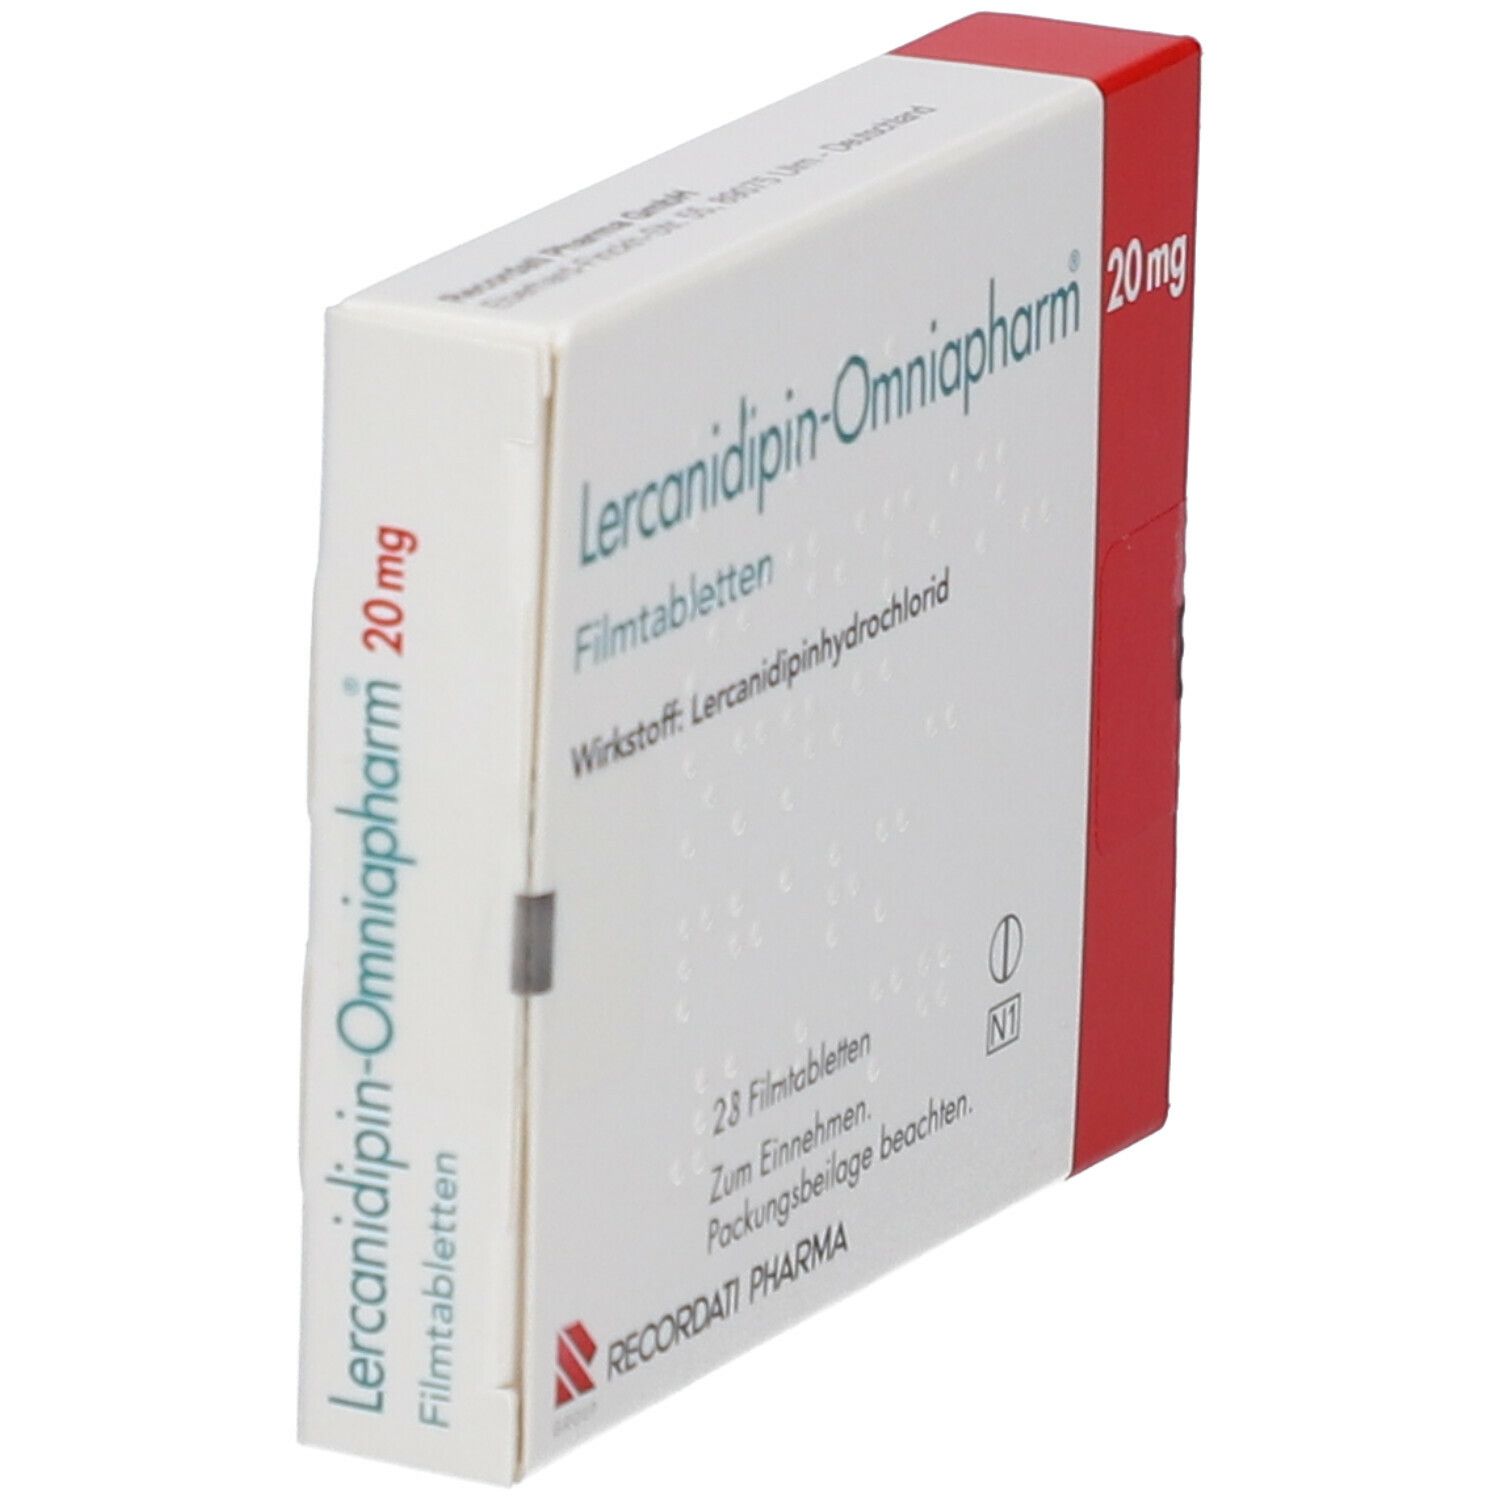 Lercanidipin Omniapharm 20 mg